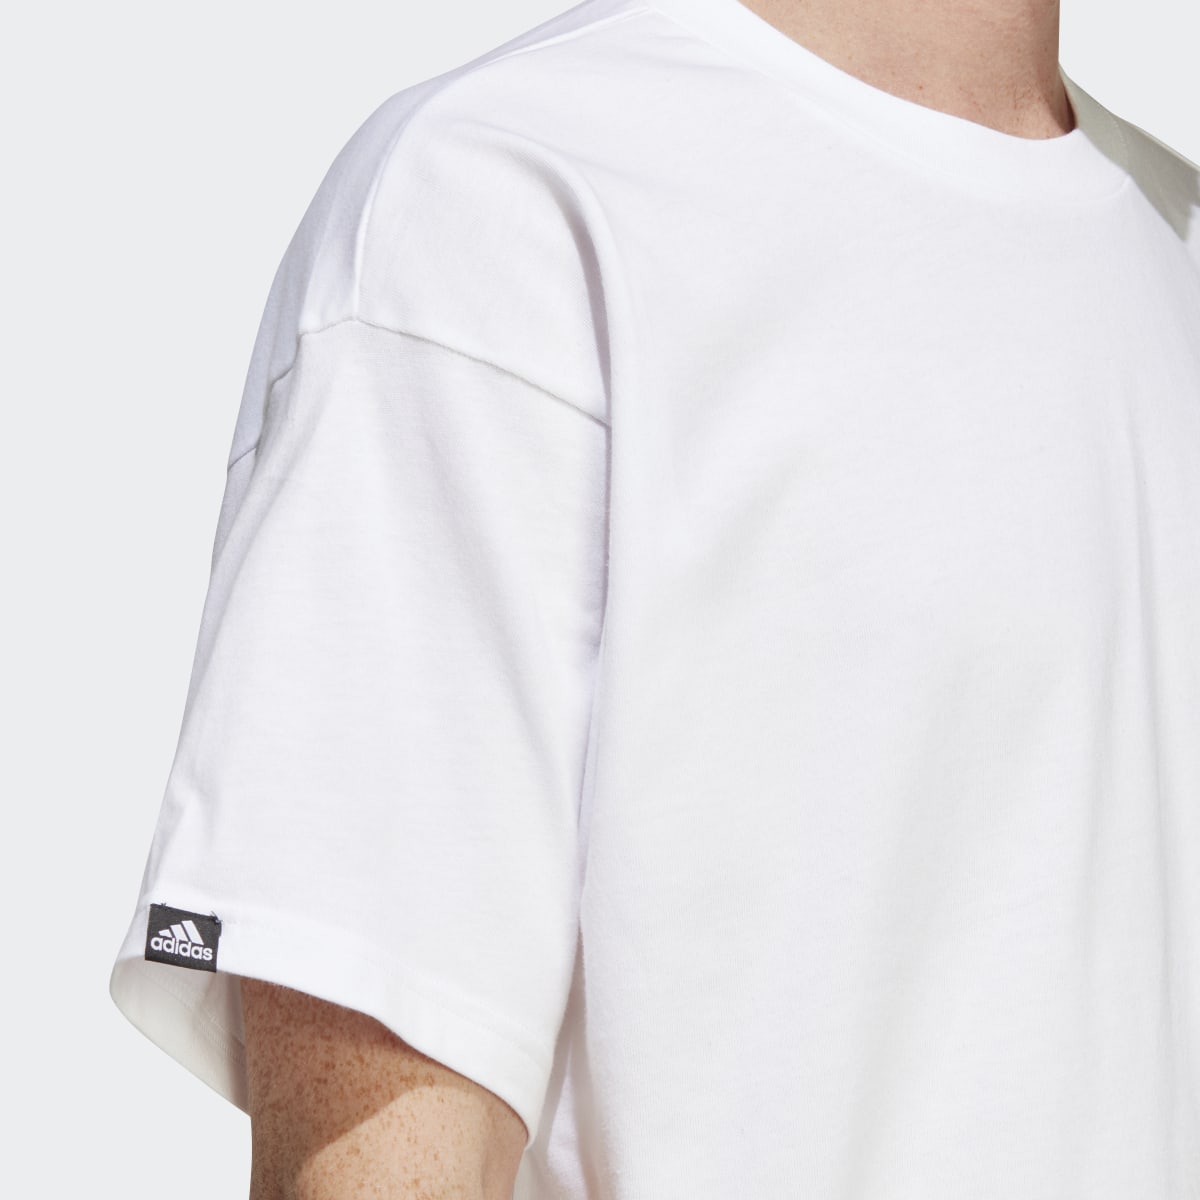 Adidas Graphic T-Shirt. 6